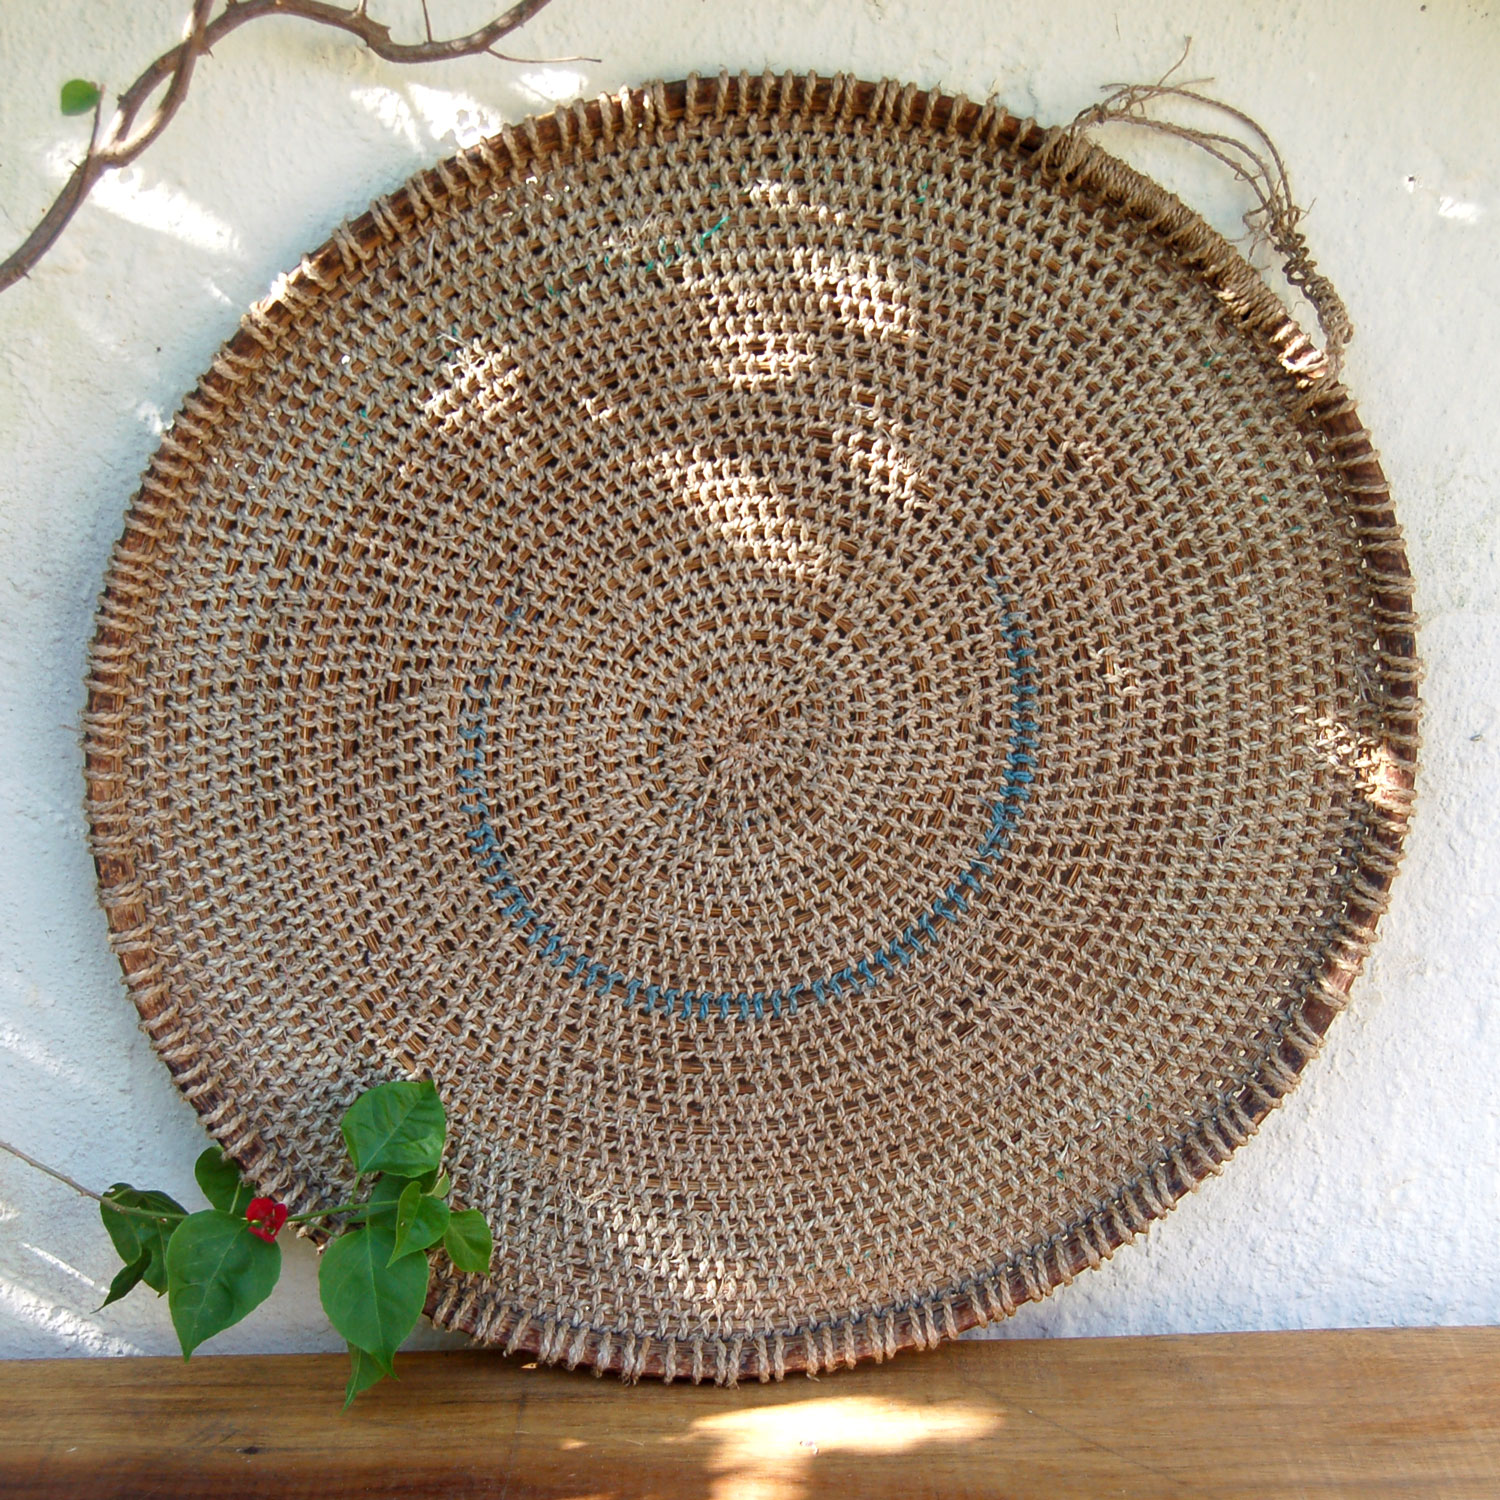 Vintage Rustic Basket Set – California country kitchen (3 piece set)